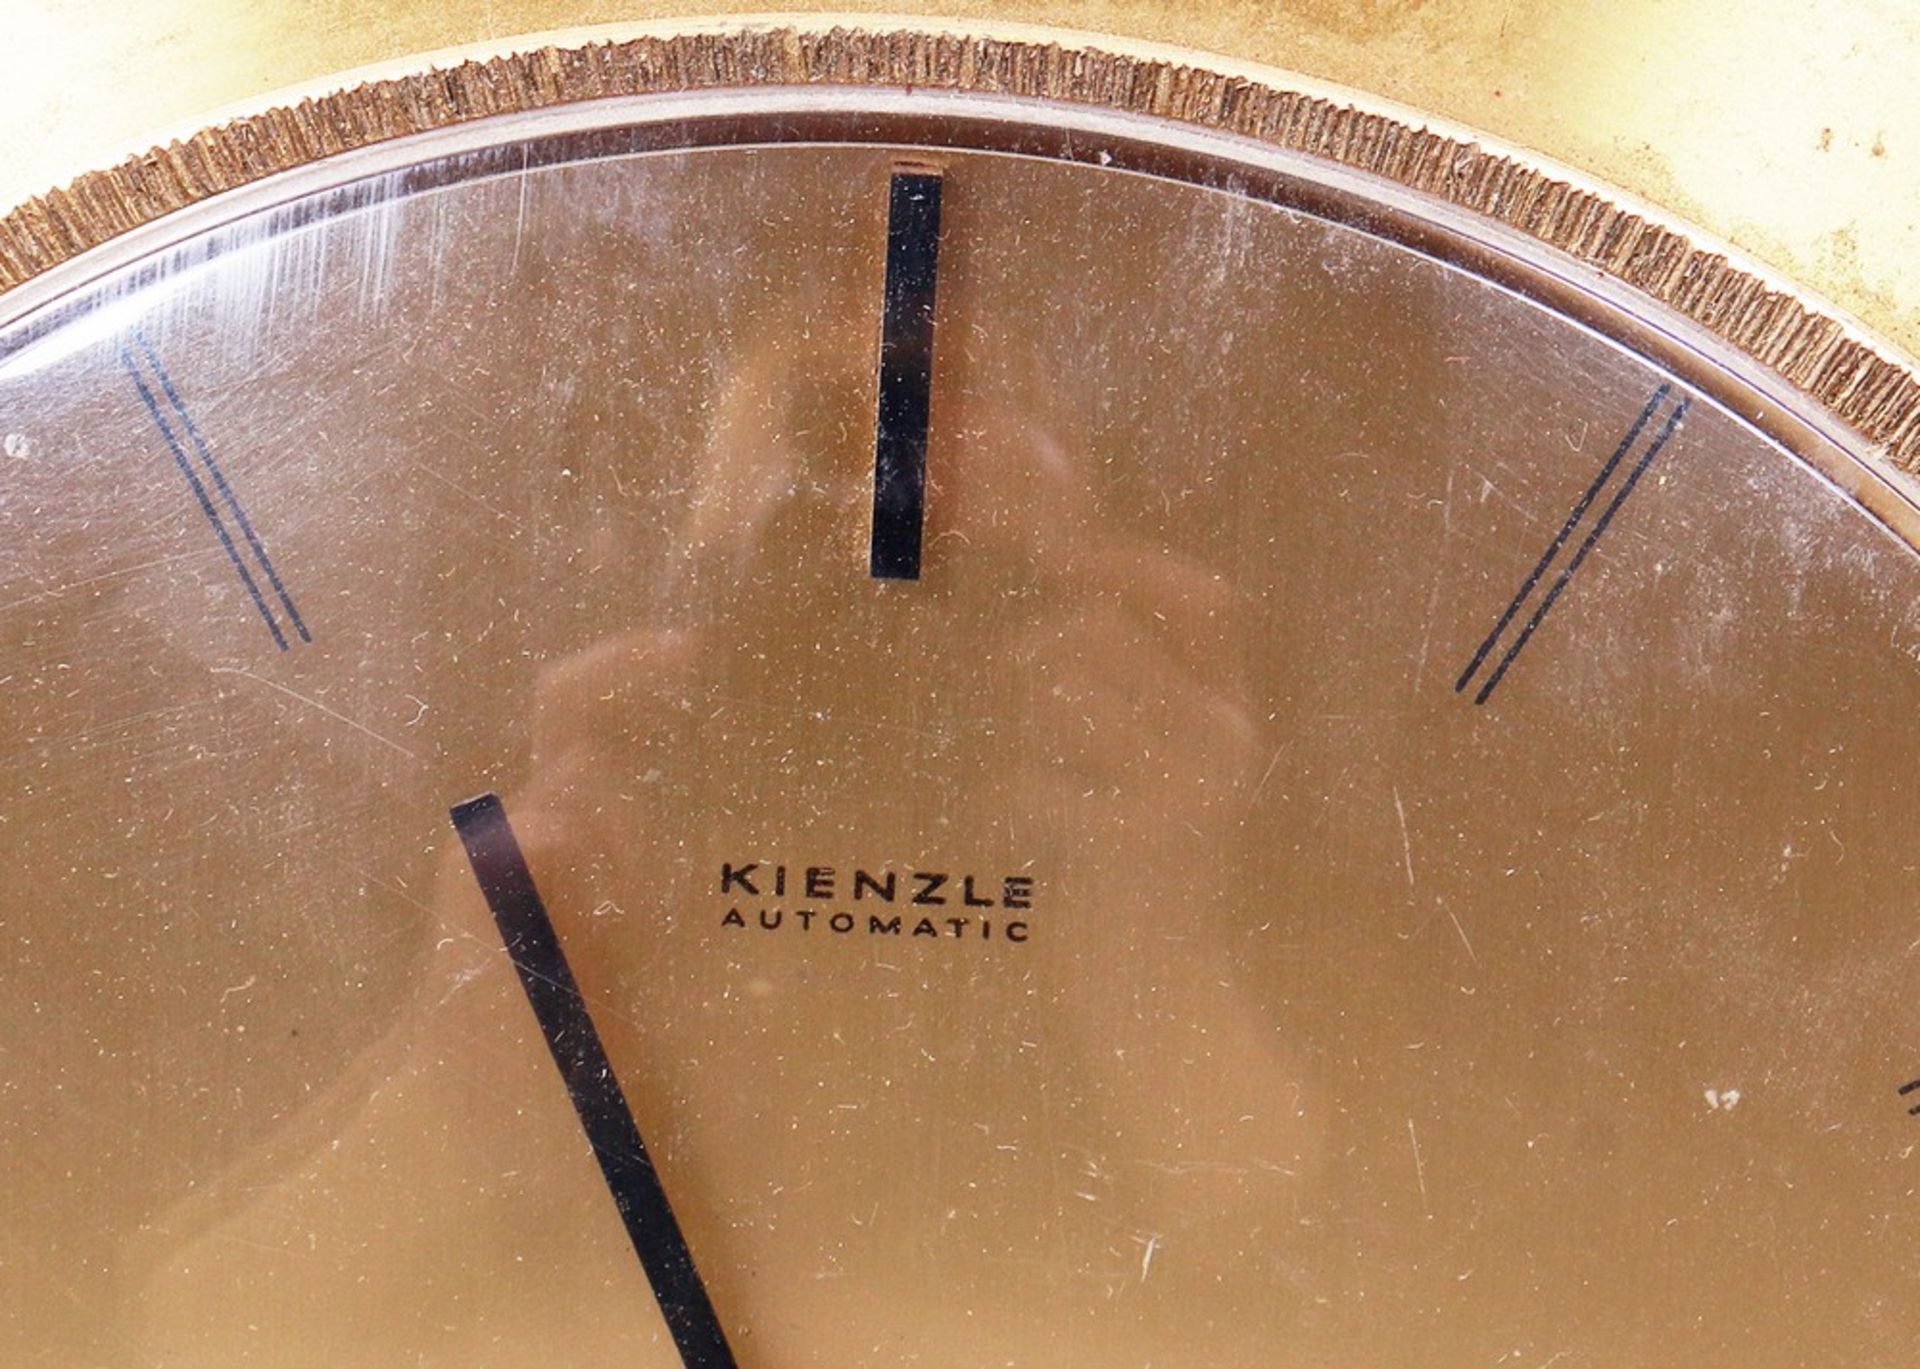 Table clock, Kienzle, 1950s - Image 3 of 3